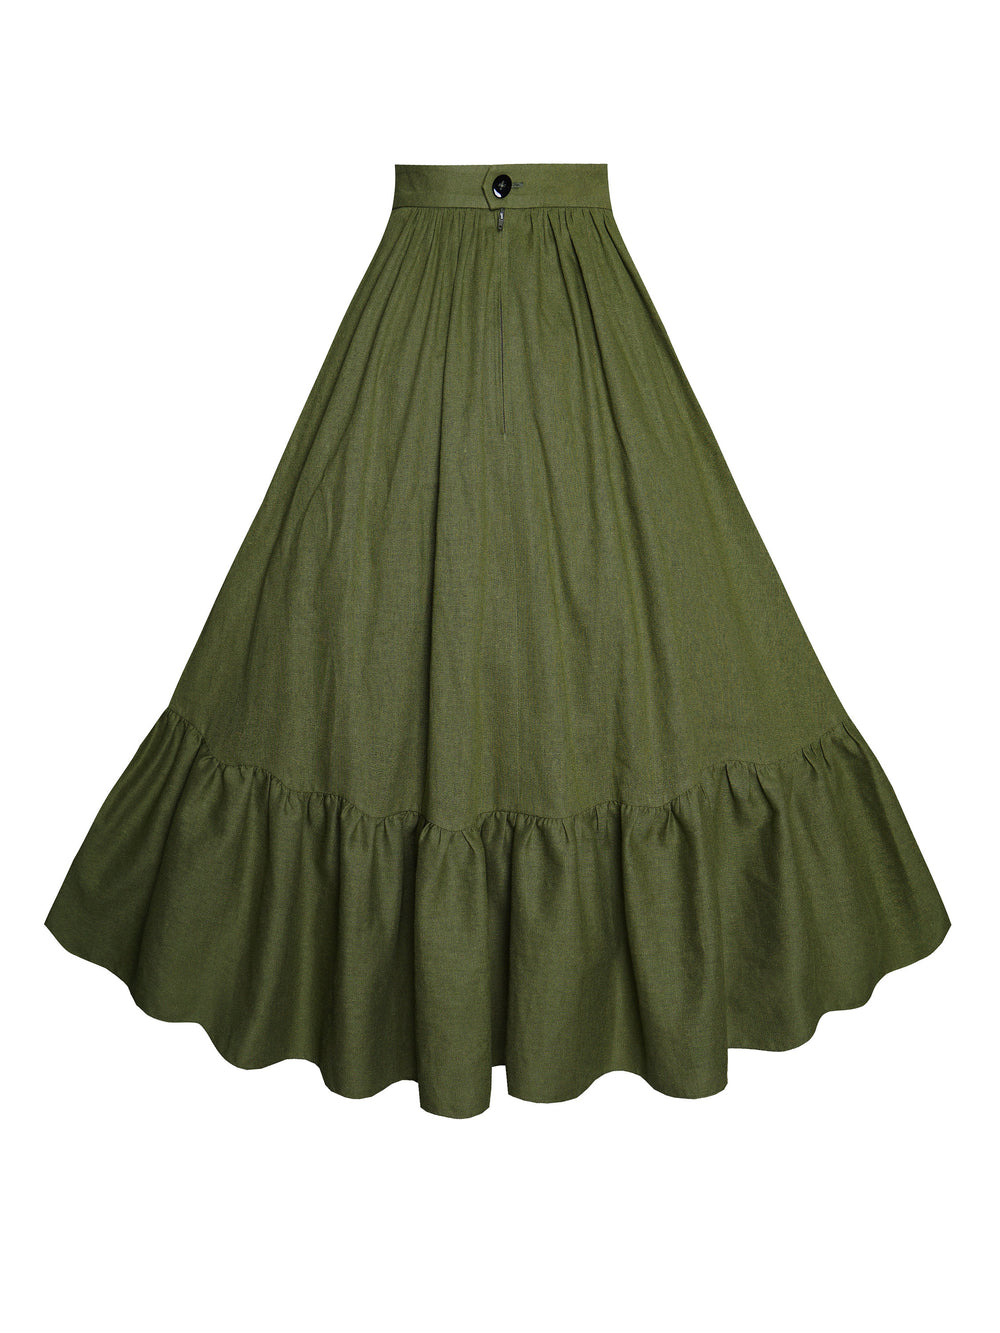 MTO - Rosita Skirt in Hunters Green Linen